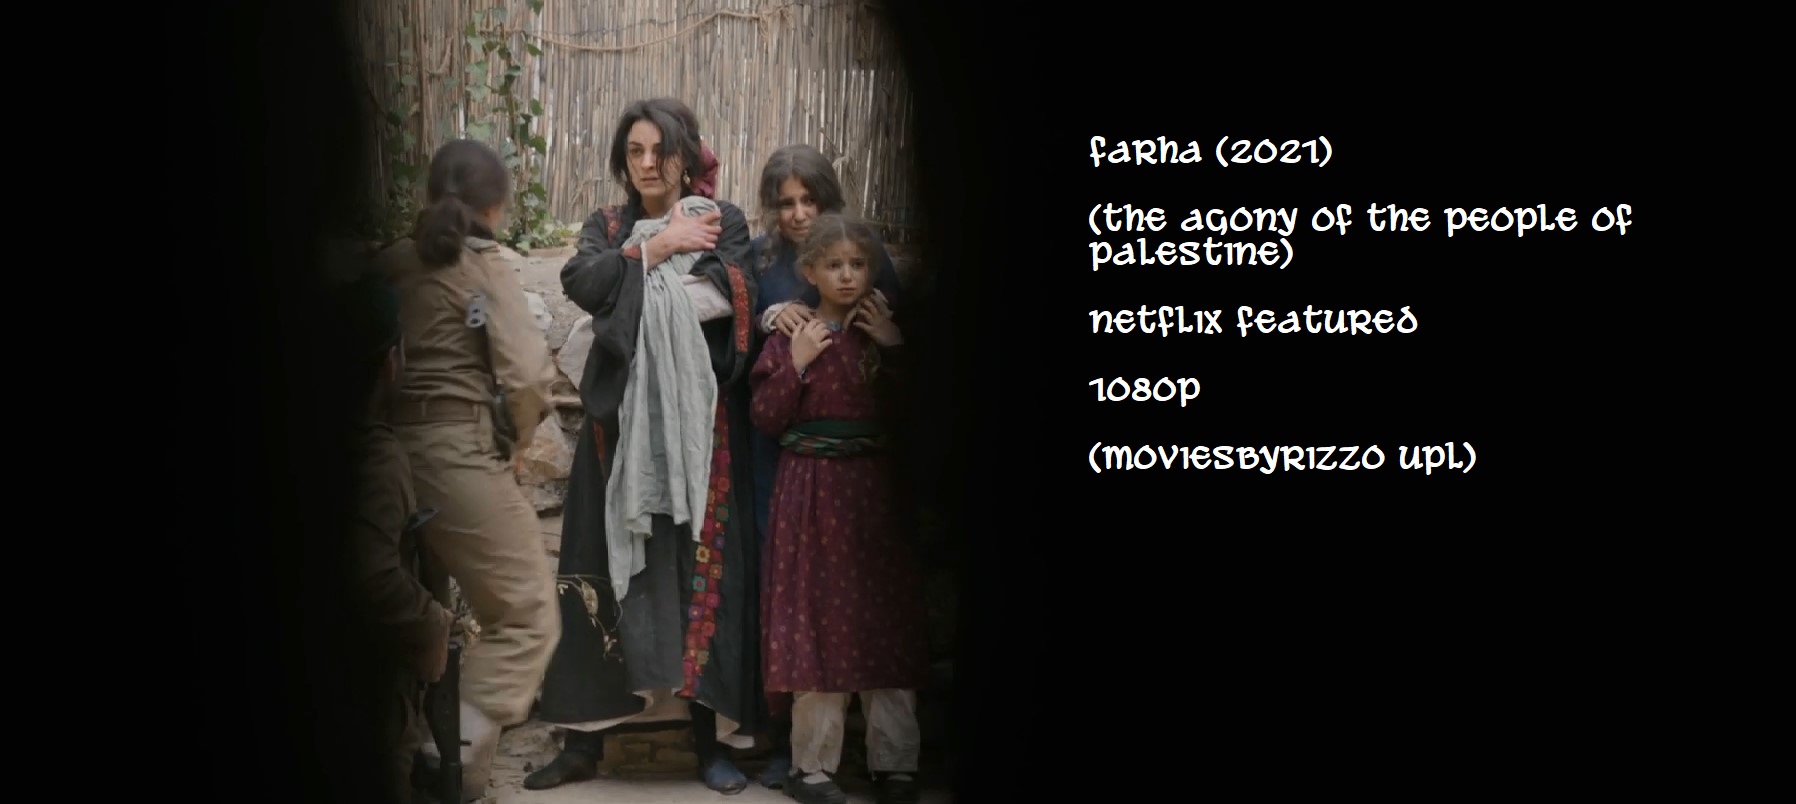 Farha 2021 The agony of Palestine Netflix feature 1080p MULTISUB moviesbyrizzo upl